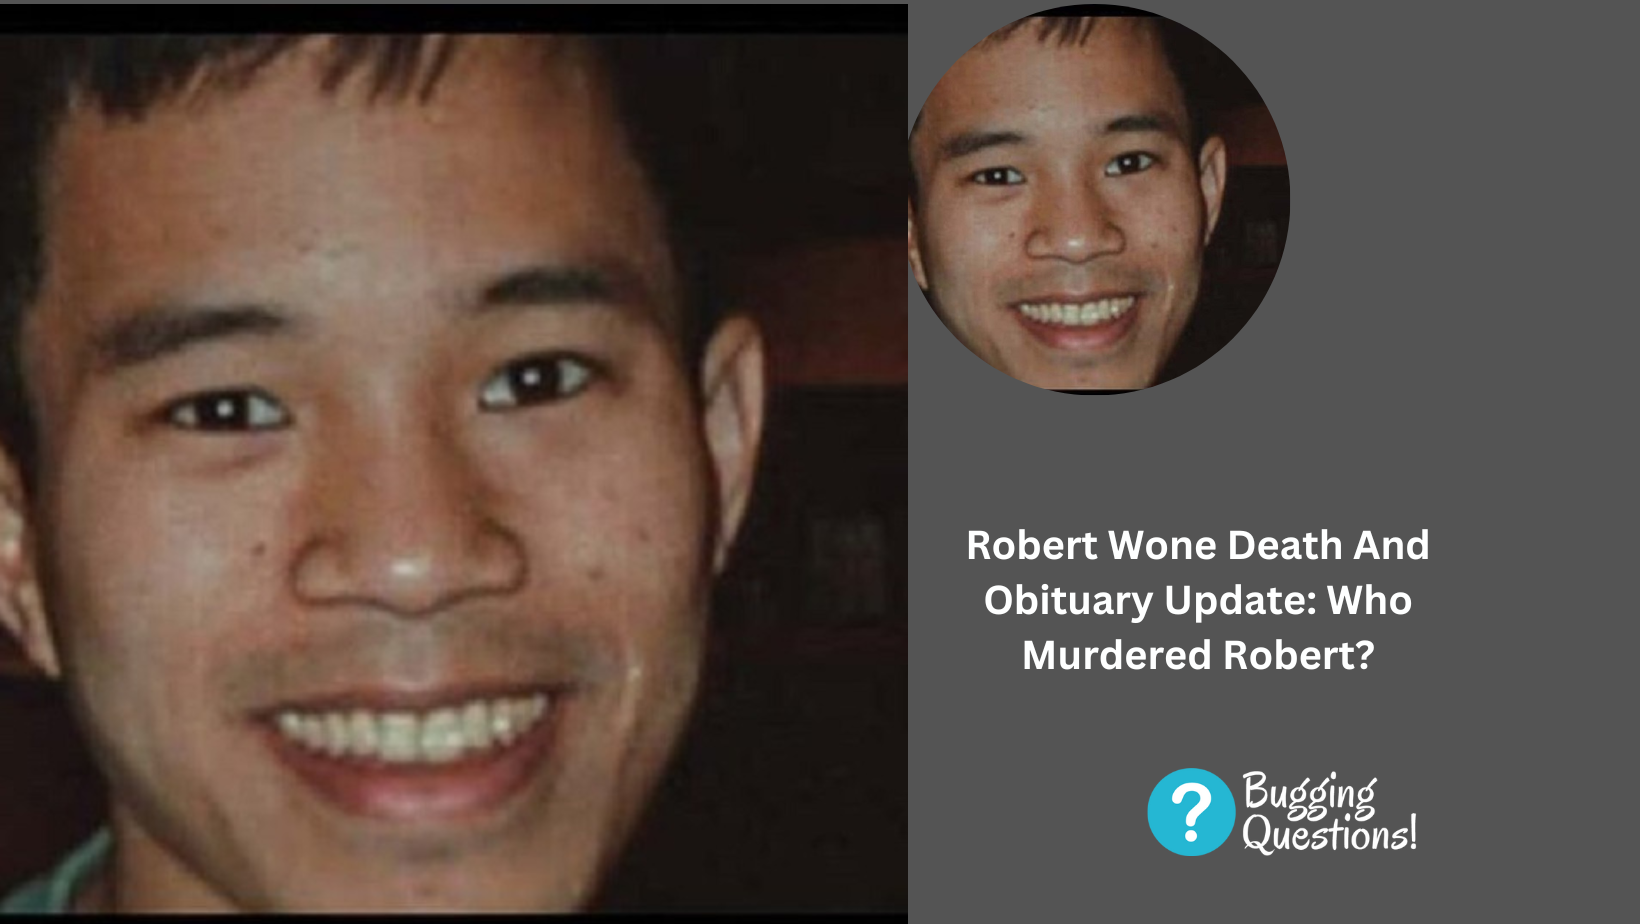 Robert Wone Death And Obituary Update: Who Murdered Robert?